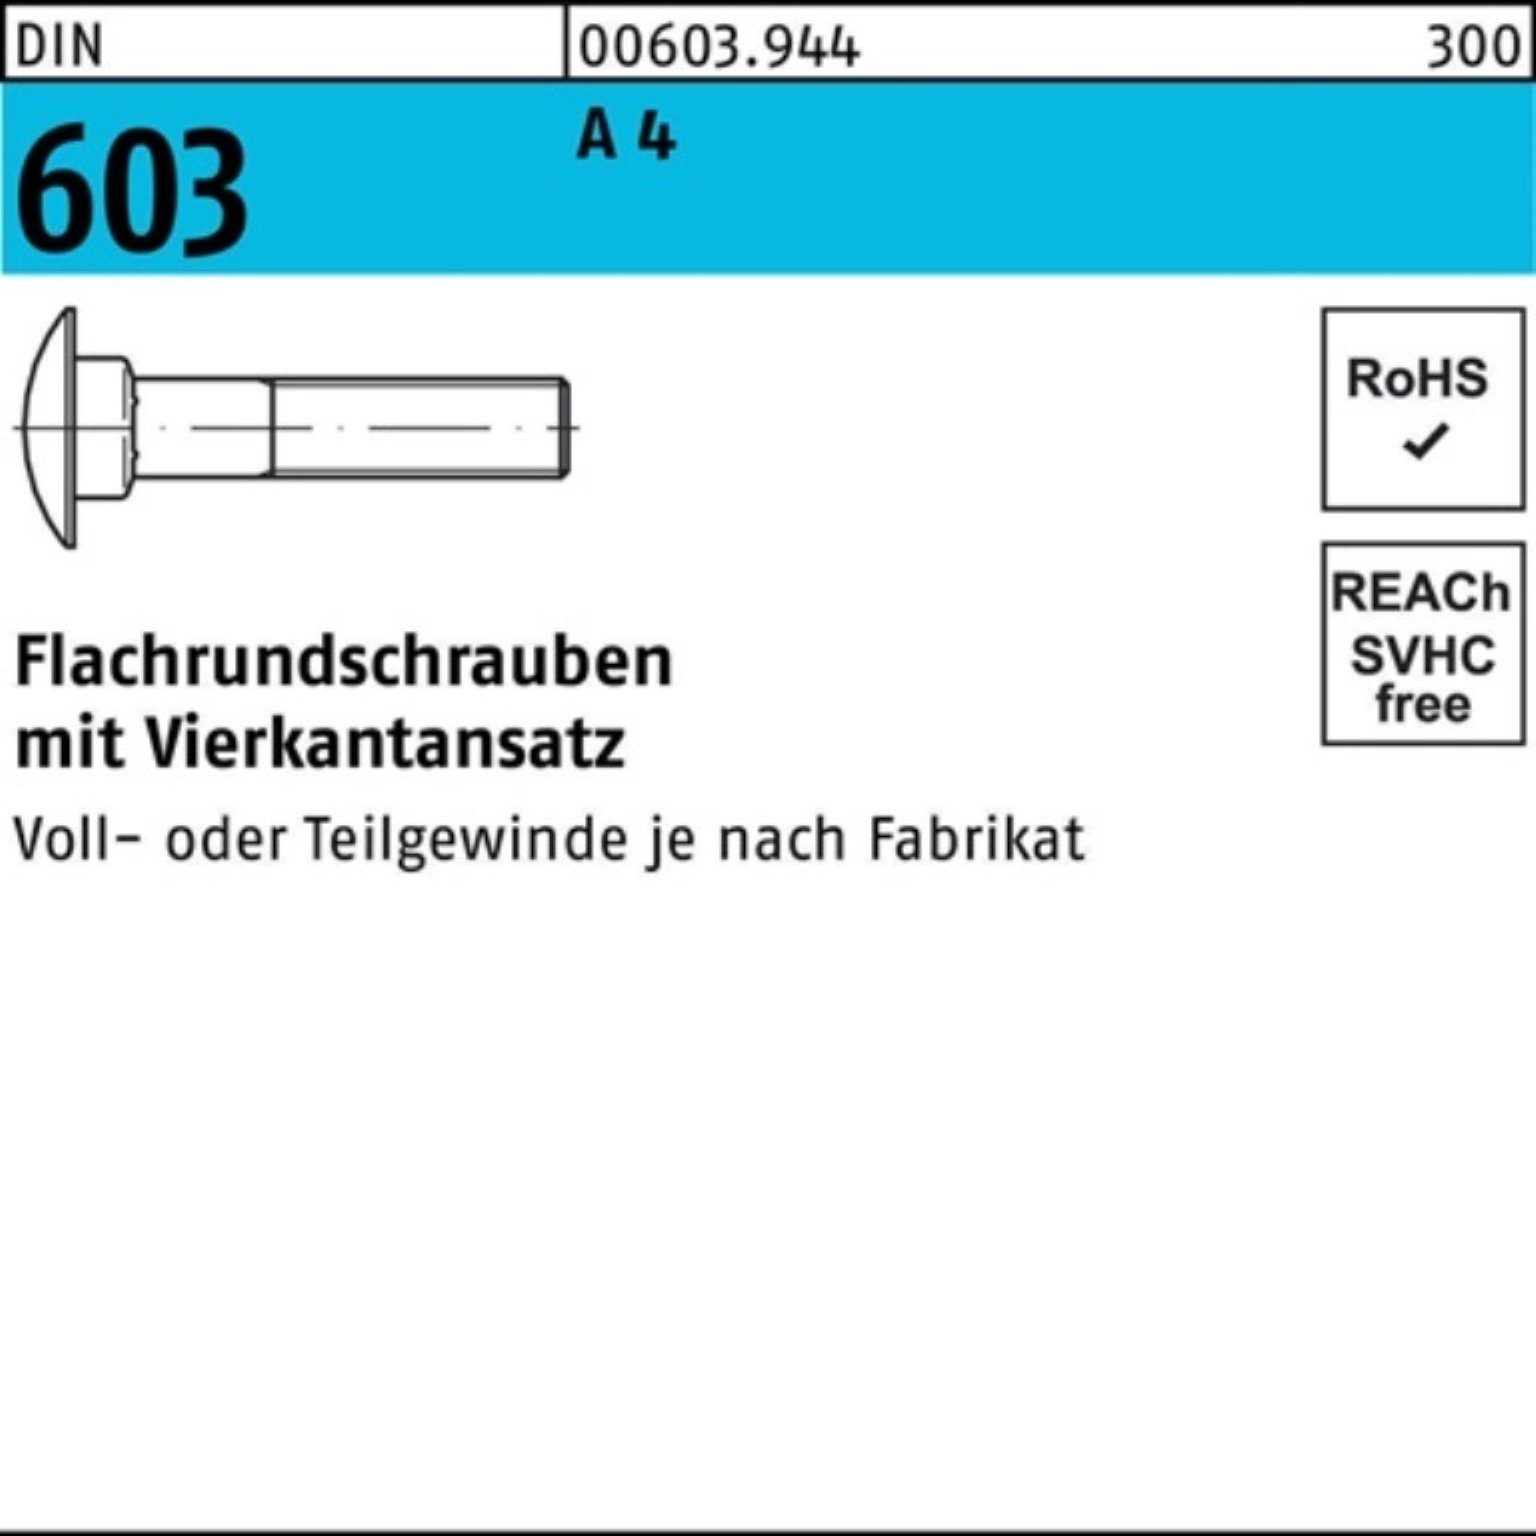 Reyher Schraube 100er Pack Flachrundschraube DIN 603 Vierkantansatz M10x 50 A 4 10 St